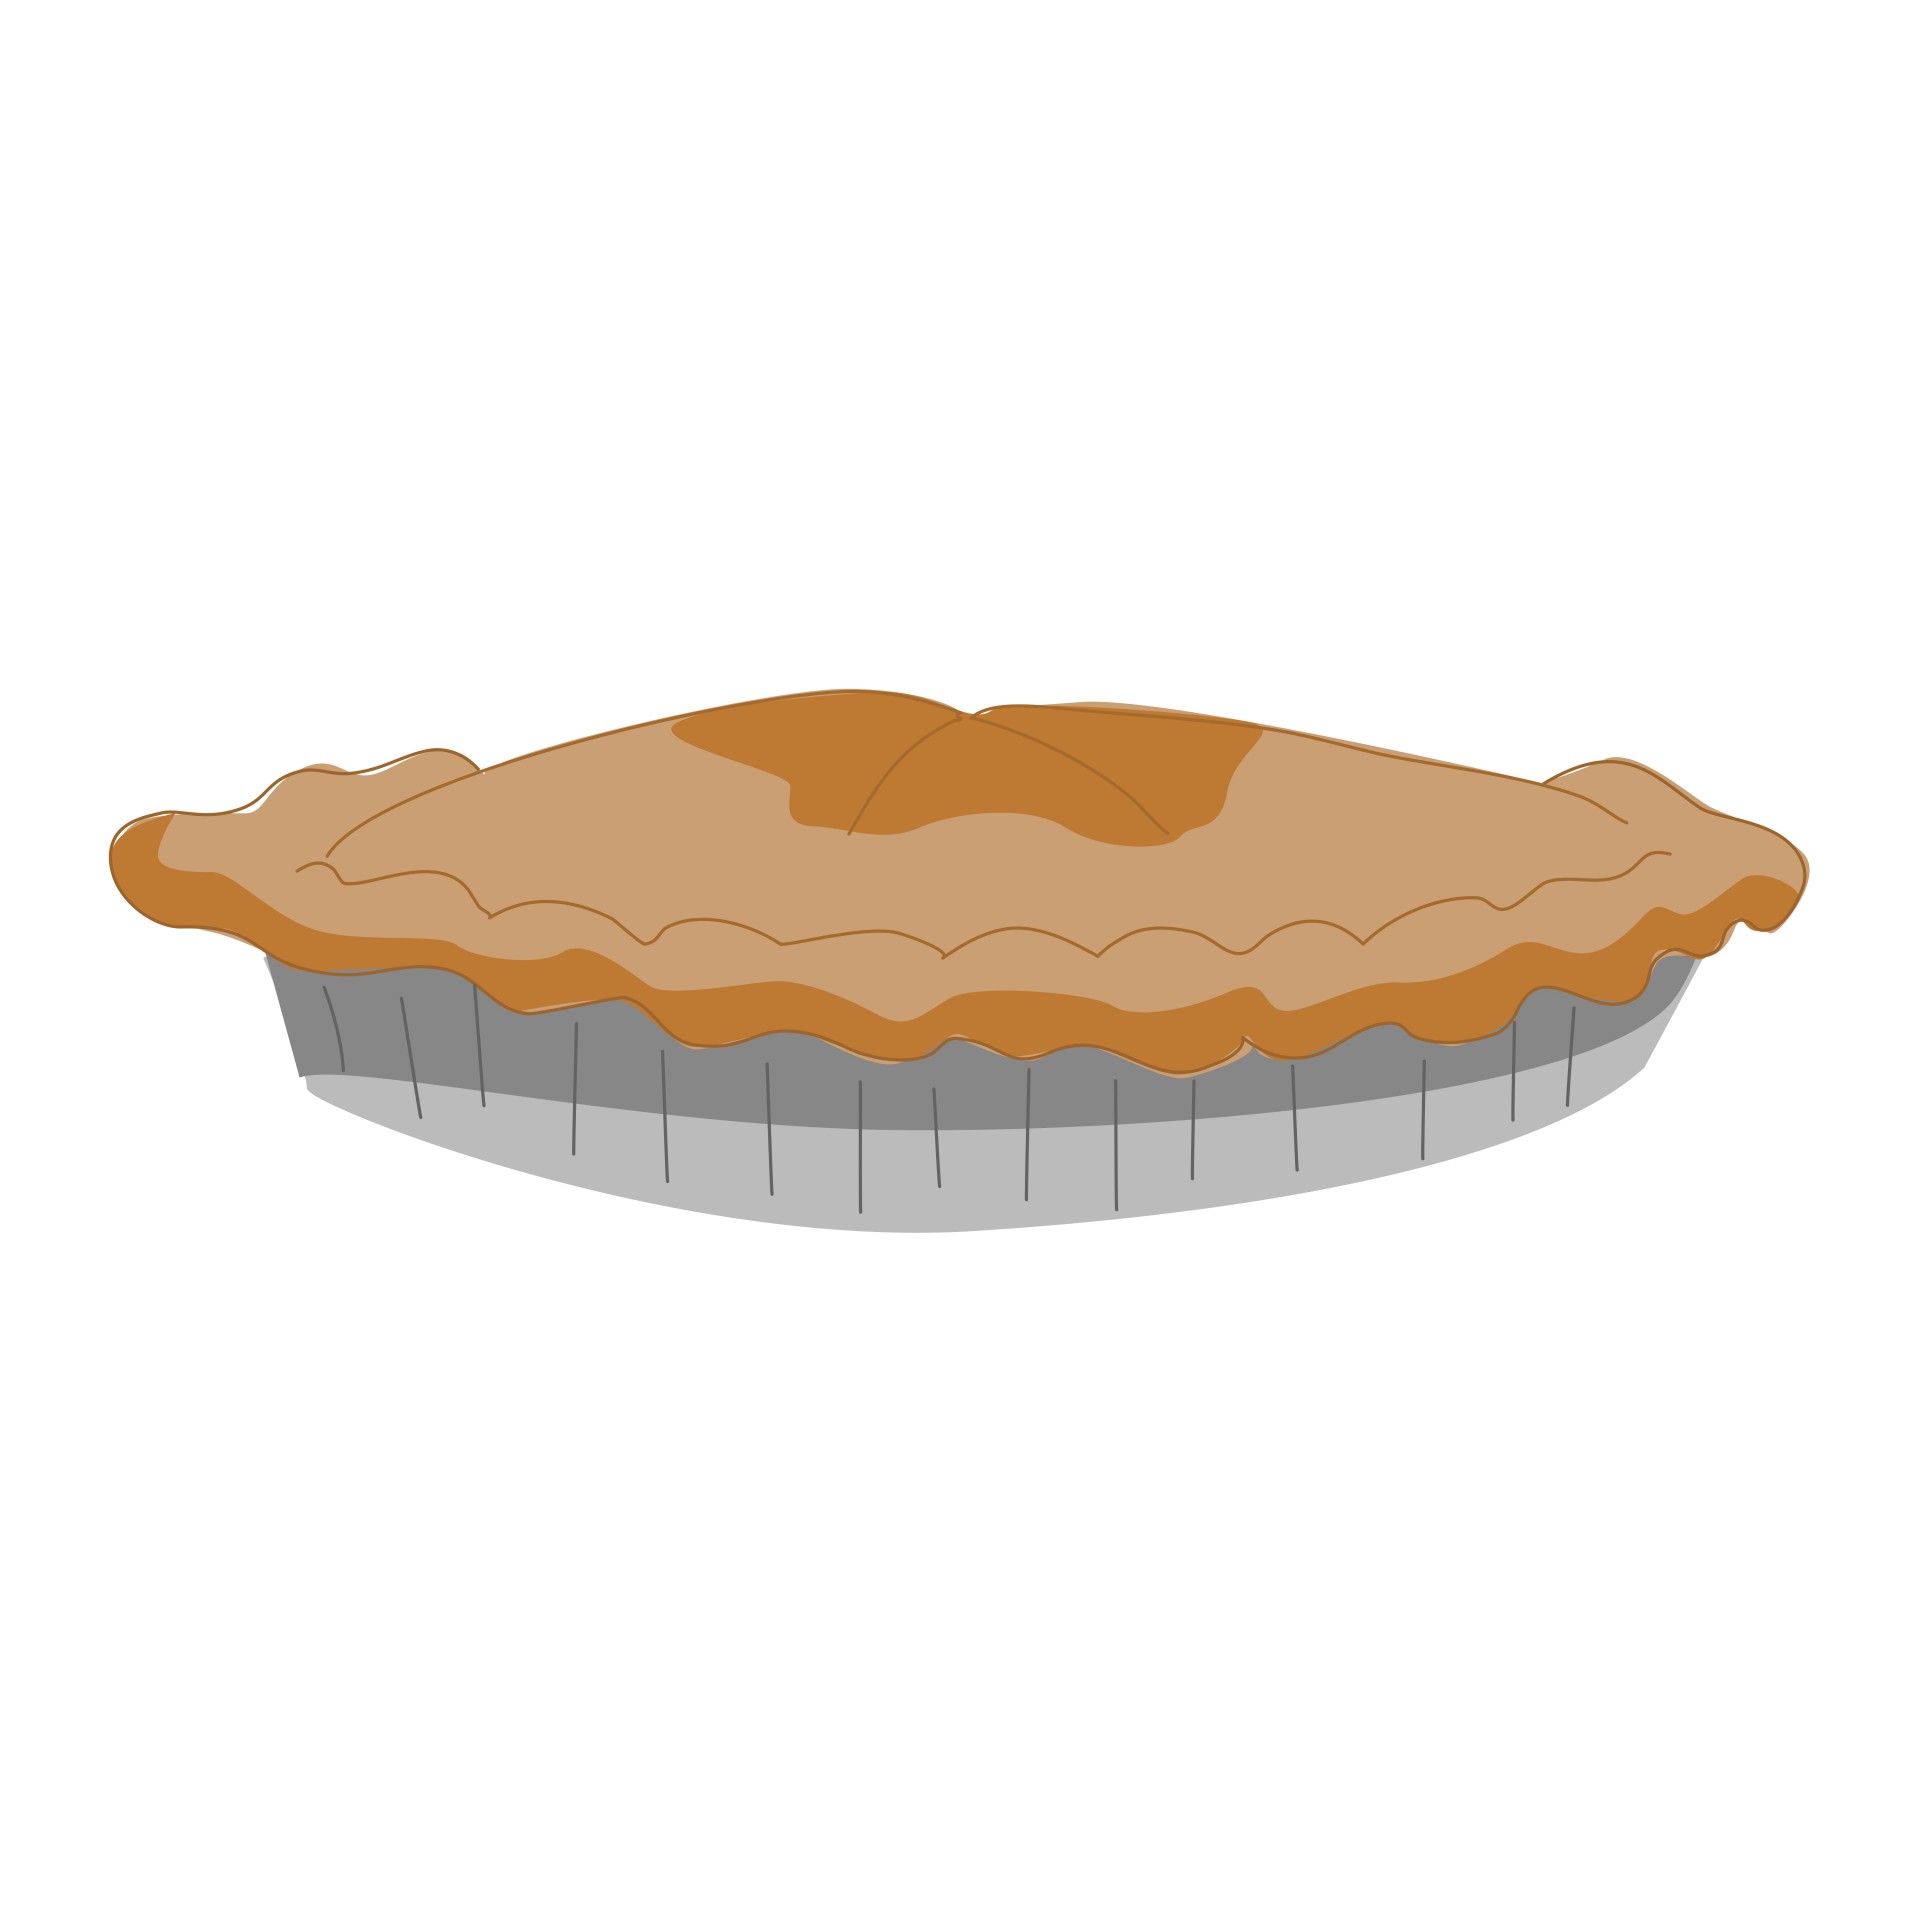 Simple Apple Pie